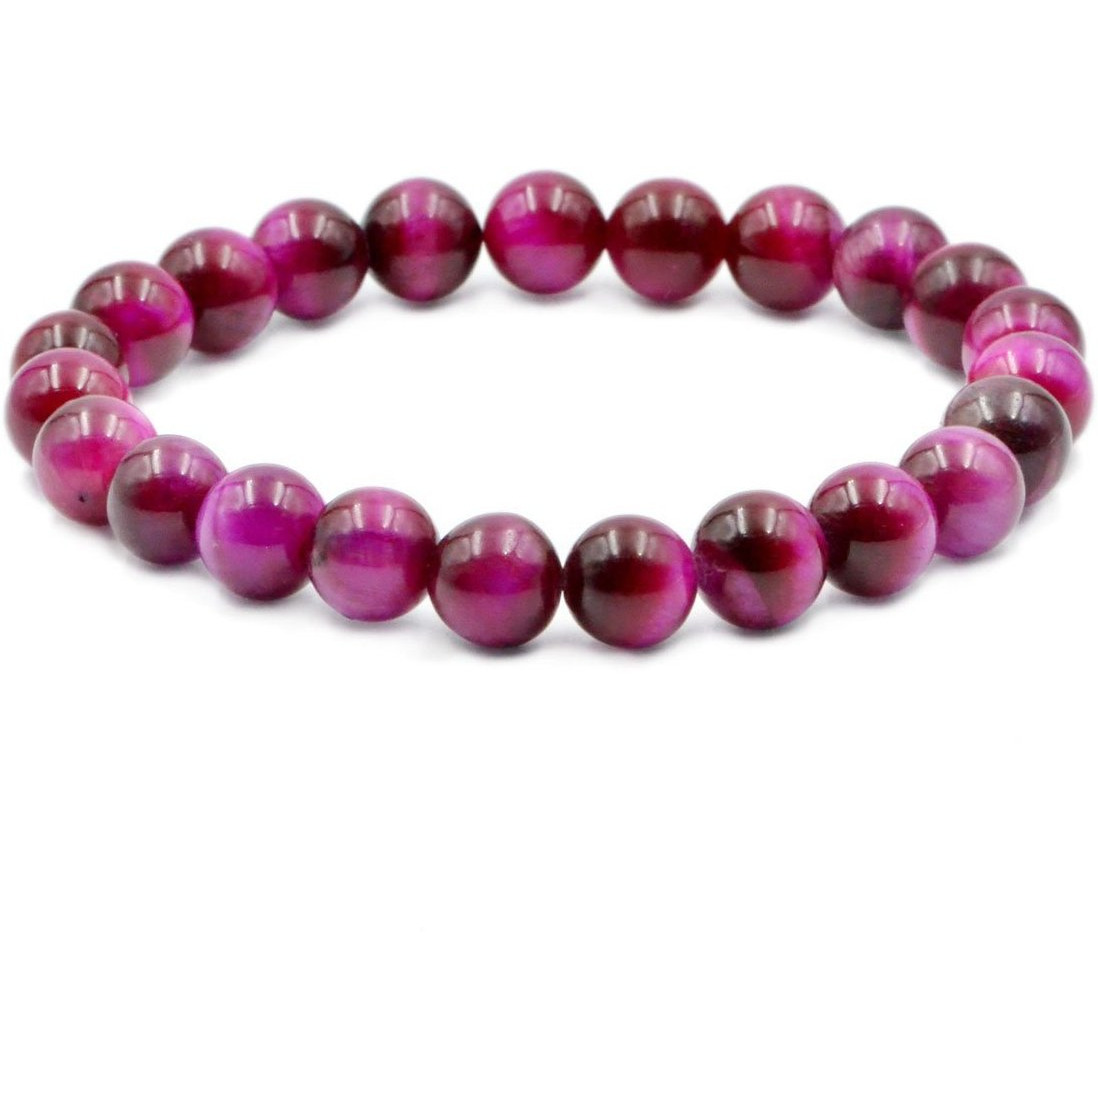 Winmaarc Rose Tigers Eye Natural Gemstone Round Beads Stretch Bracelet Healing Reiki 8mm